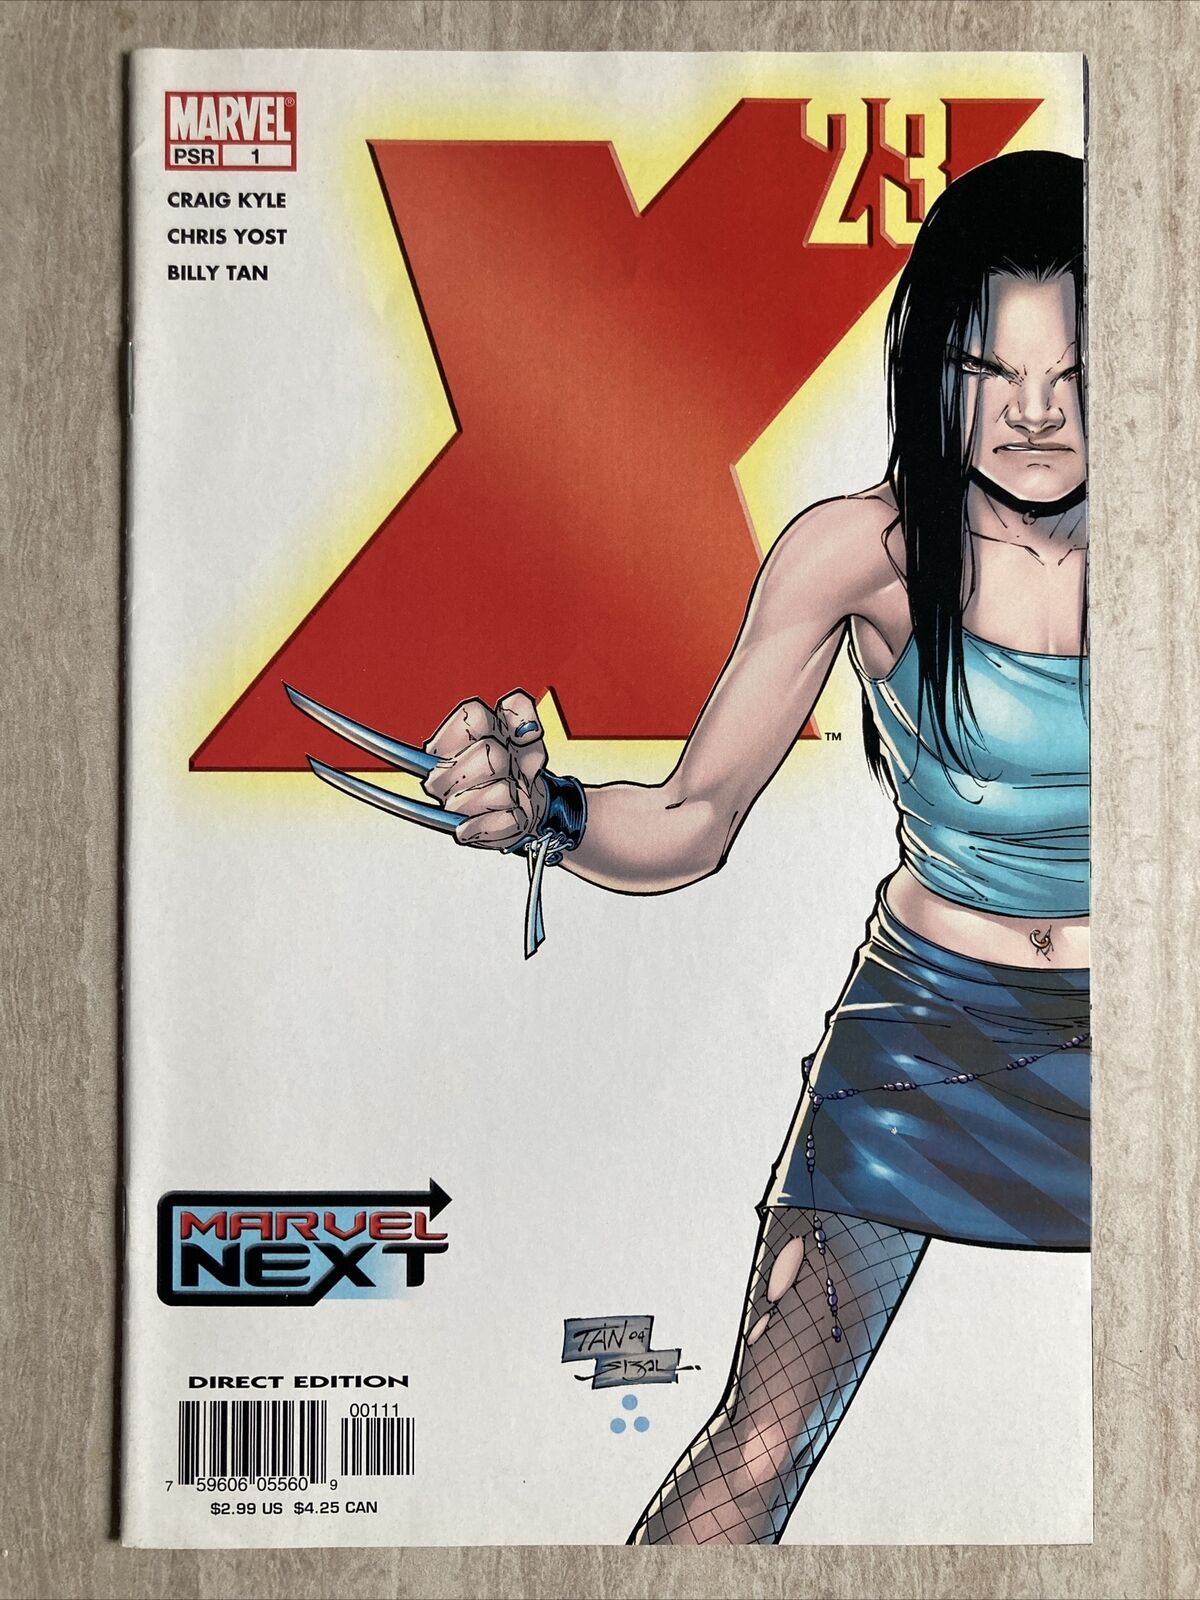 X 23 #1 Marvel Next (Marvel Comics 2005)